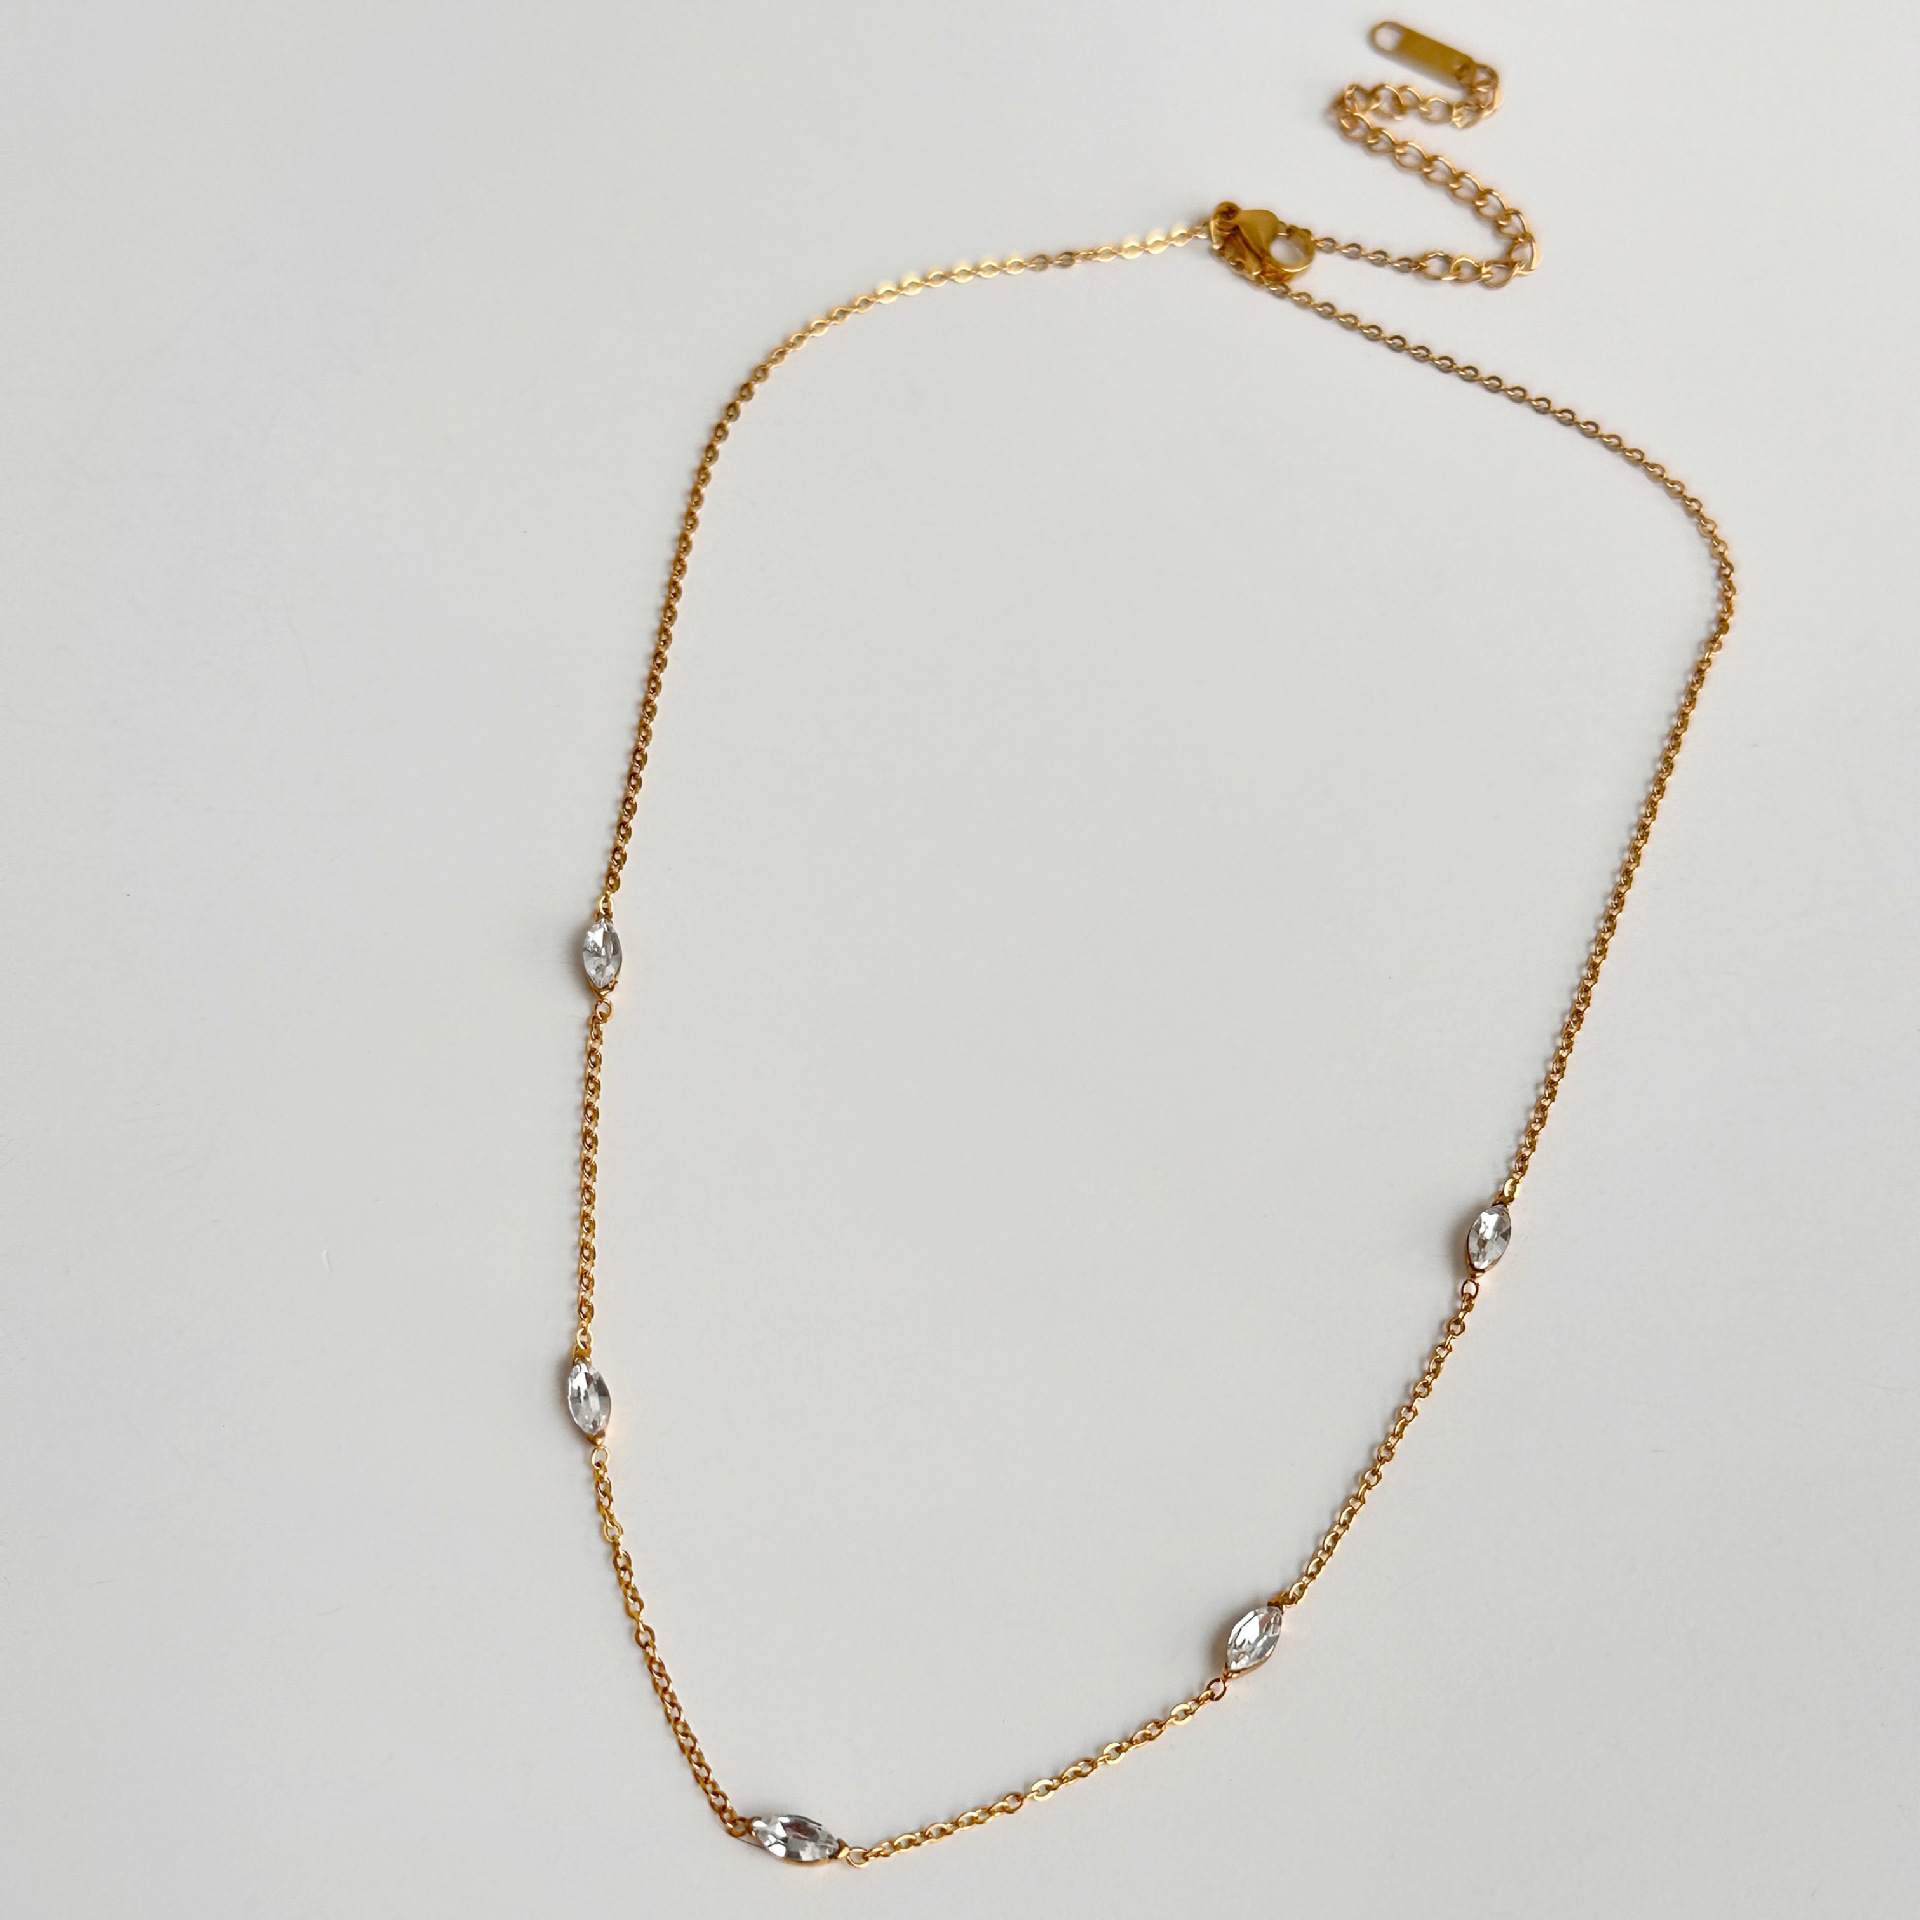 3:41x5cm necklace transparent zirconium